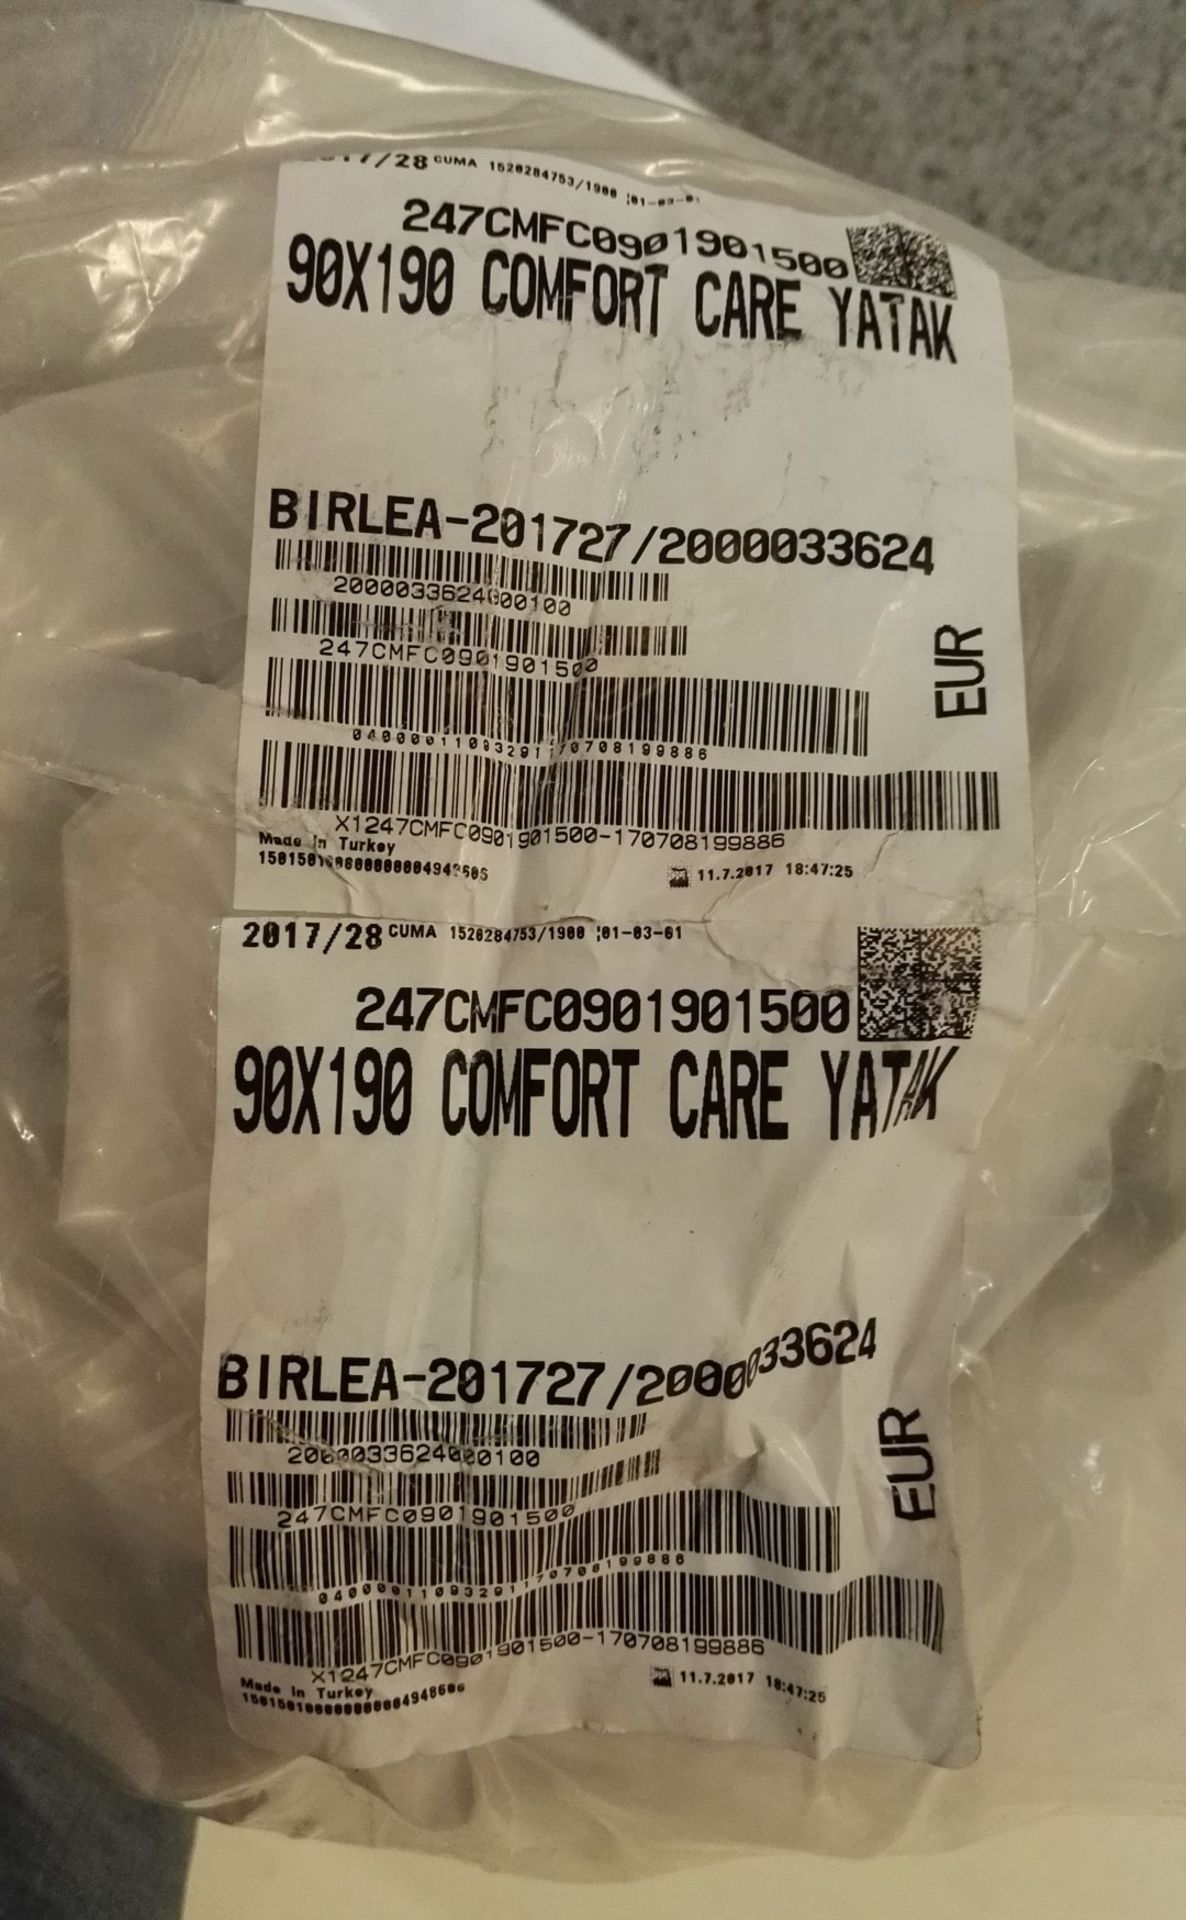 1 x Birlea 90cm Comfort Care Firm Rolled Up Reflex Foam Mattress - Brand New Stock - CL286 - - Image 5 of 6